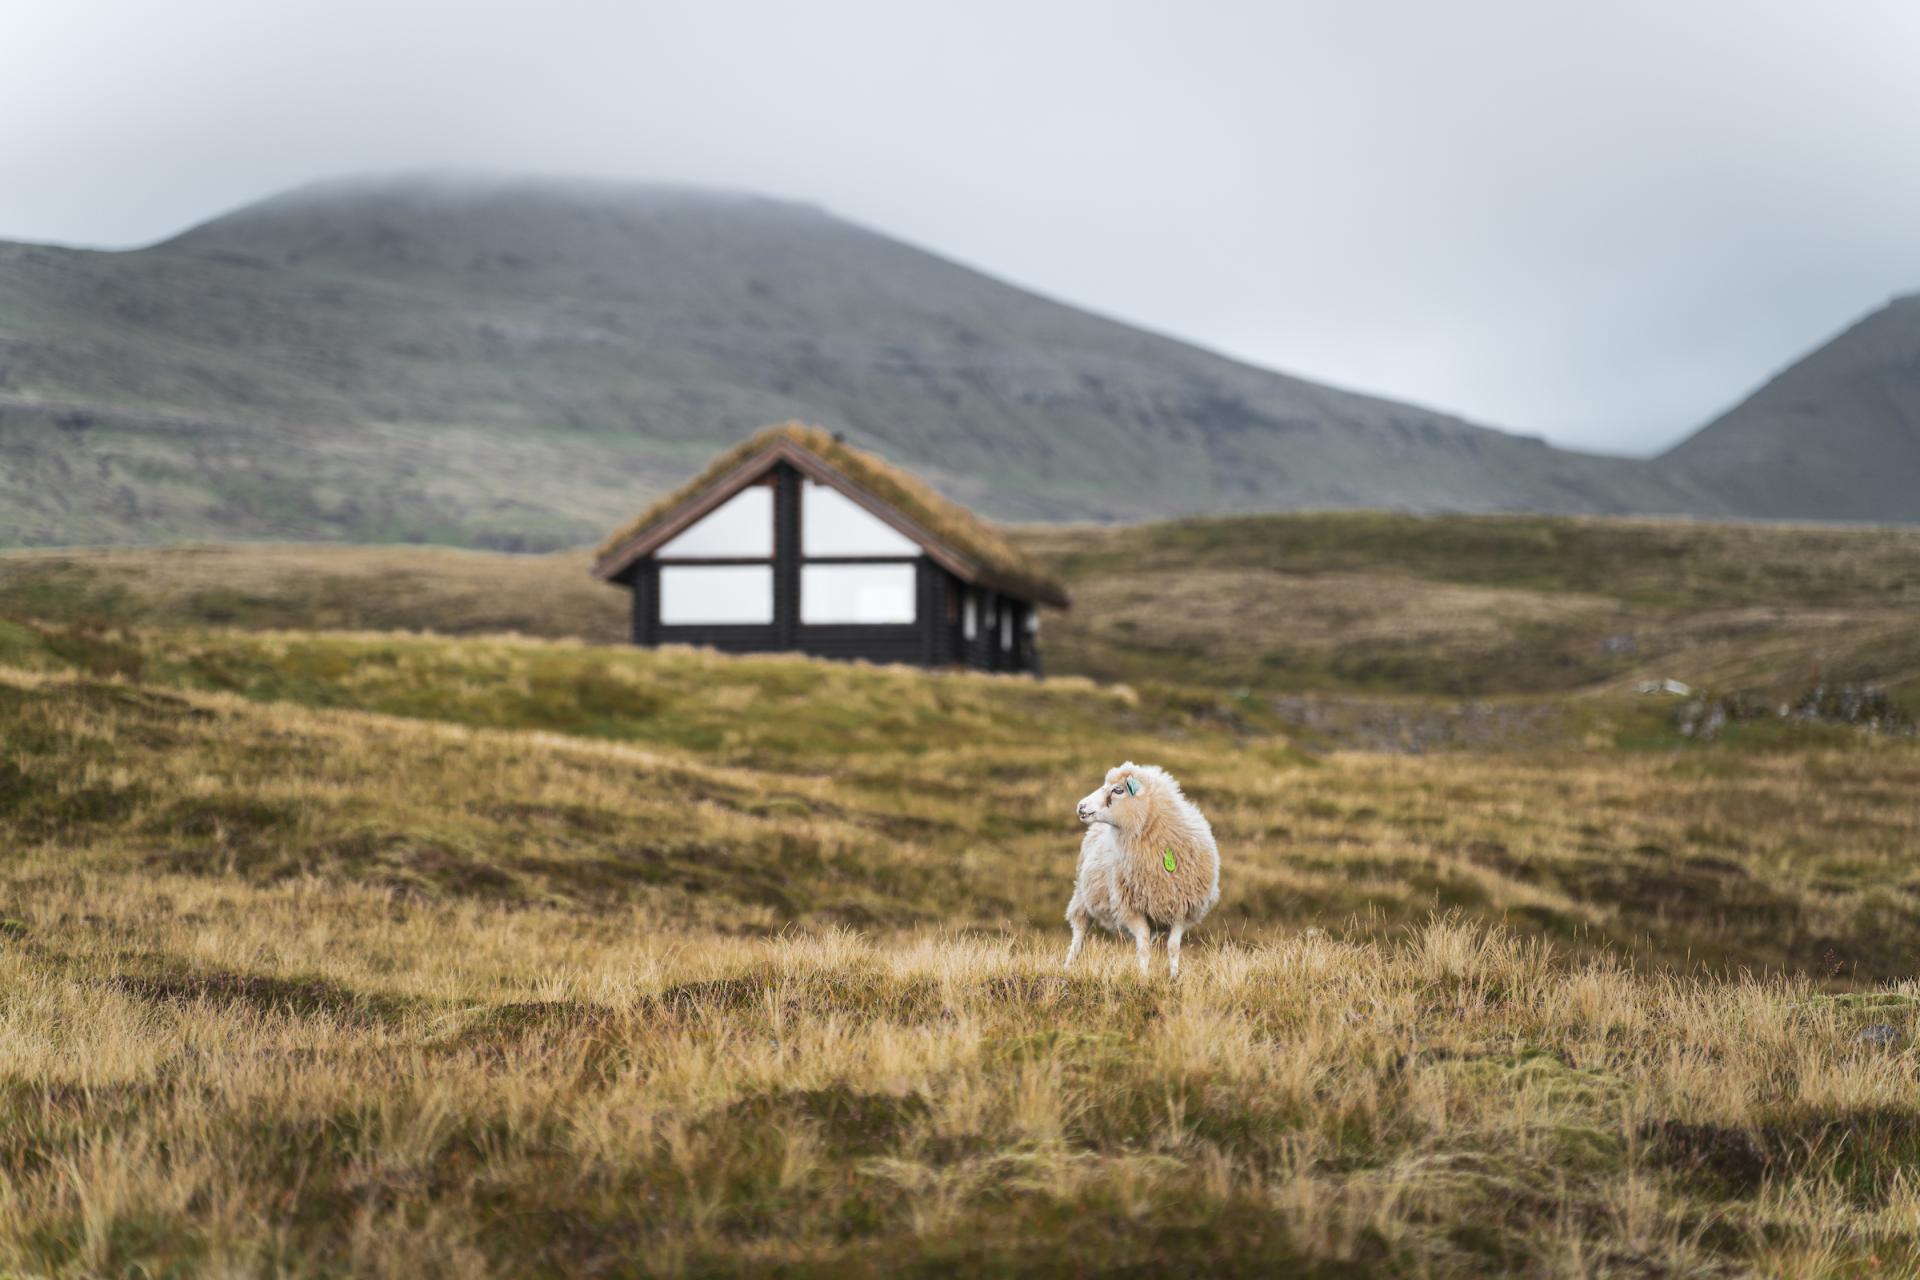 Thumbnail of - Cabin in nature, Faroe Islands. By Paul & Sybille Bréchu / @paulbrechu